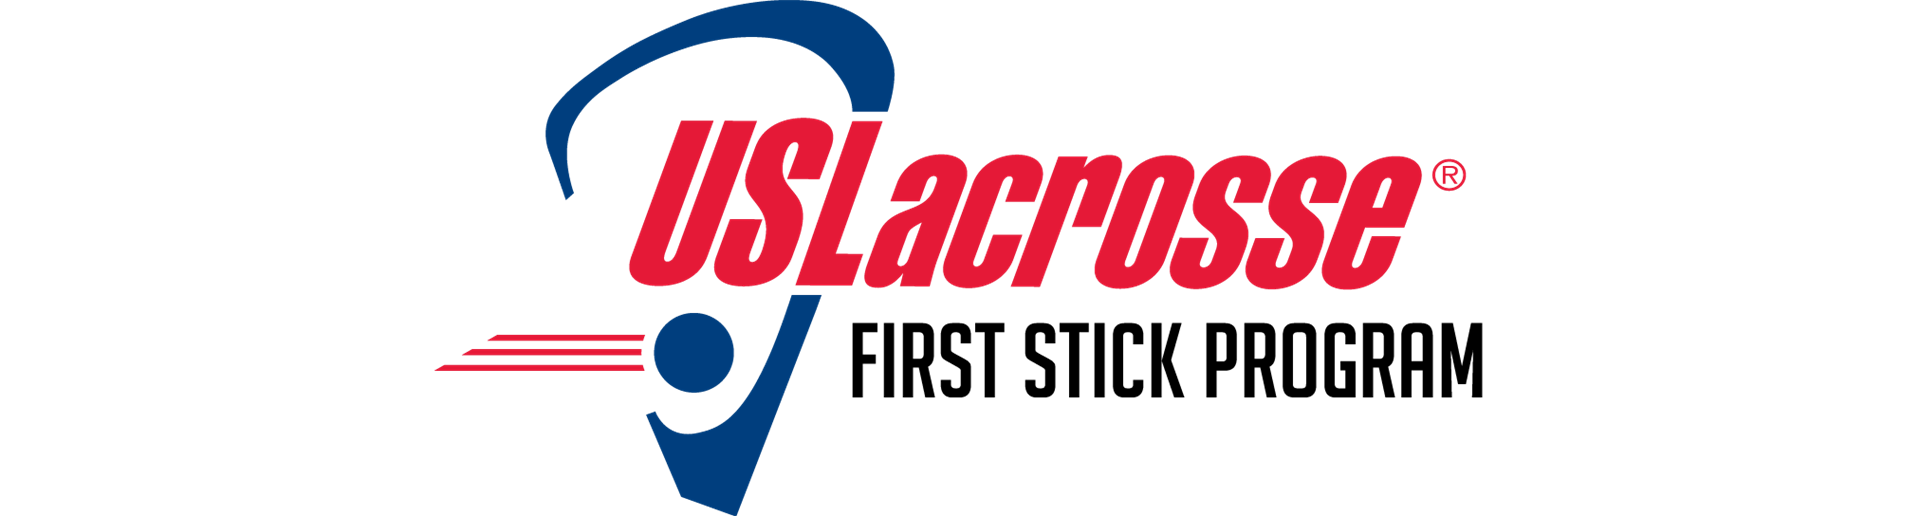 2020 Winners of The US Lacrosse Equipment Grant!